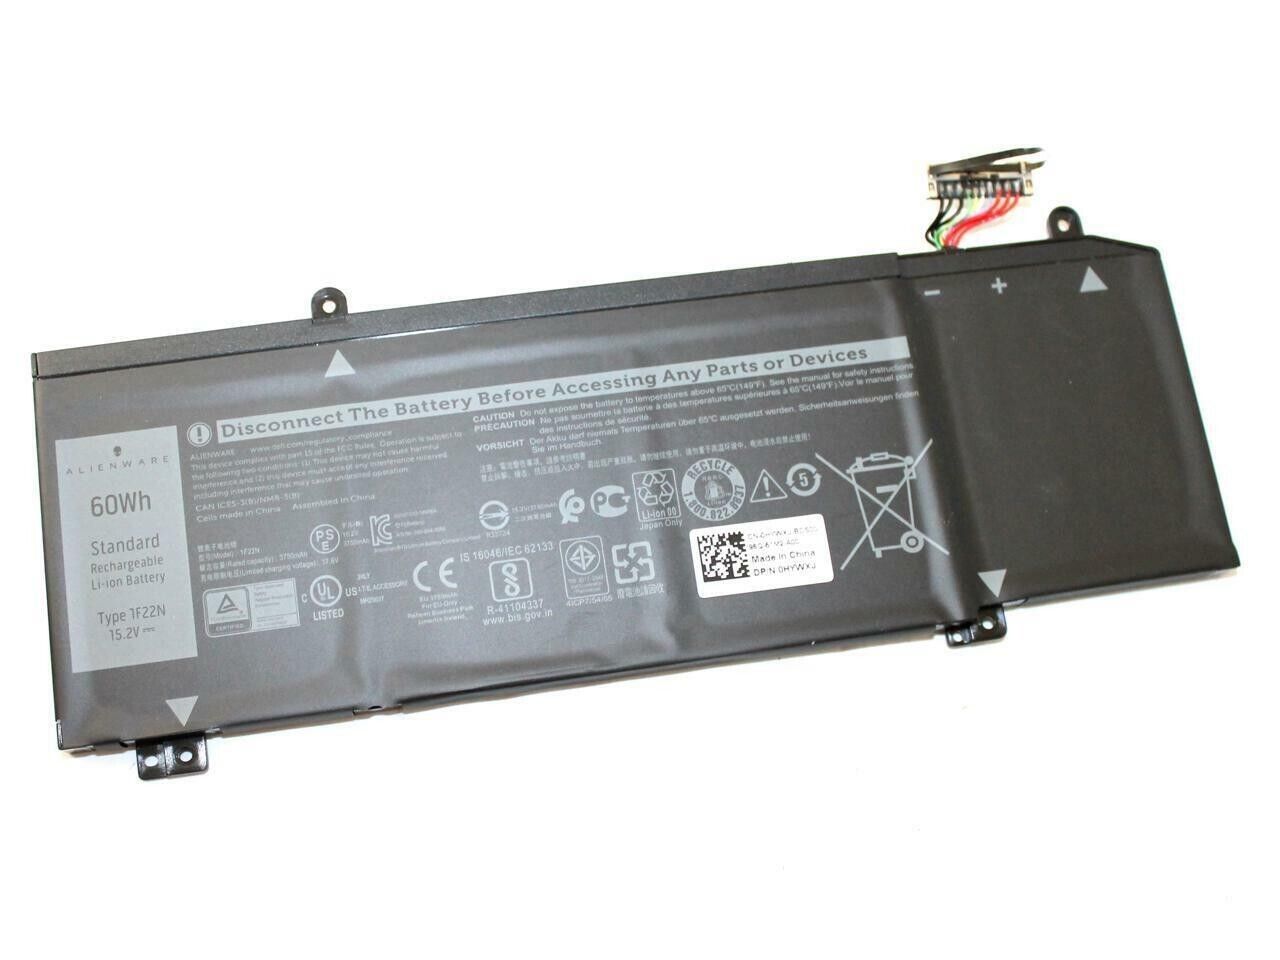 GENUINE Dell 1F22N Alienware M15 15.2V 60Wh HYWXJ Li-ion Laptop Battery